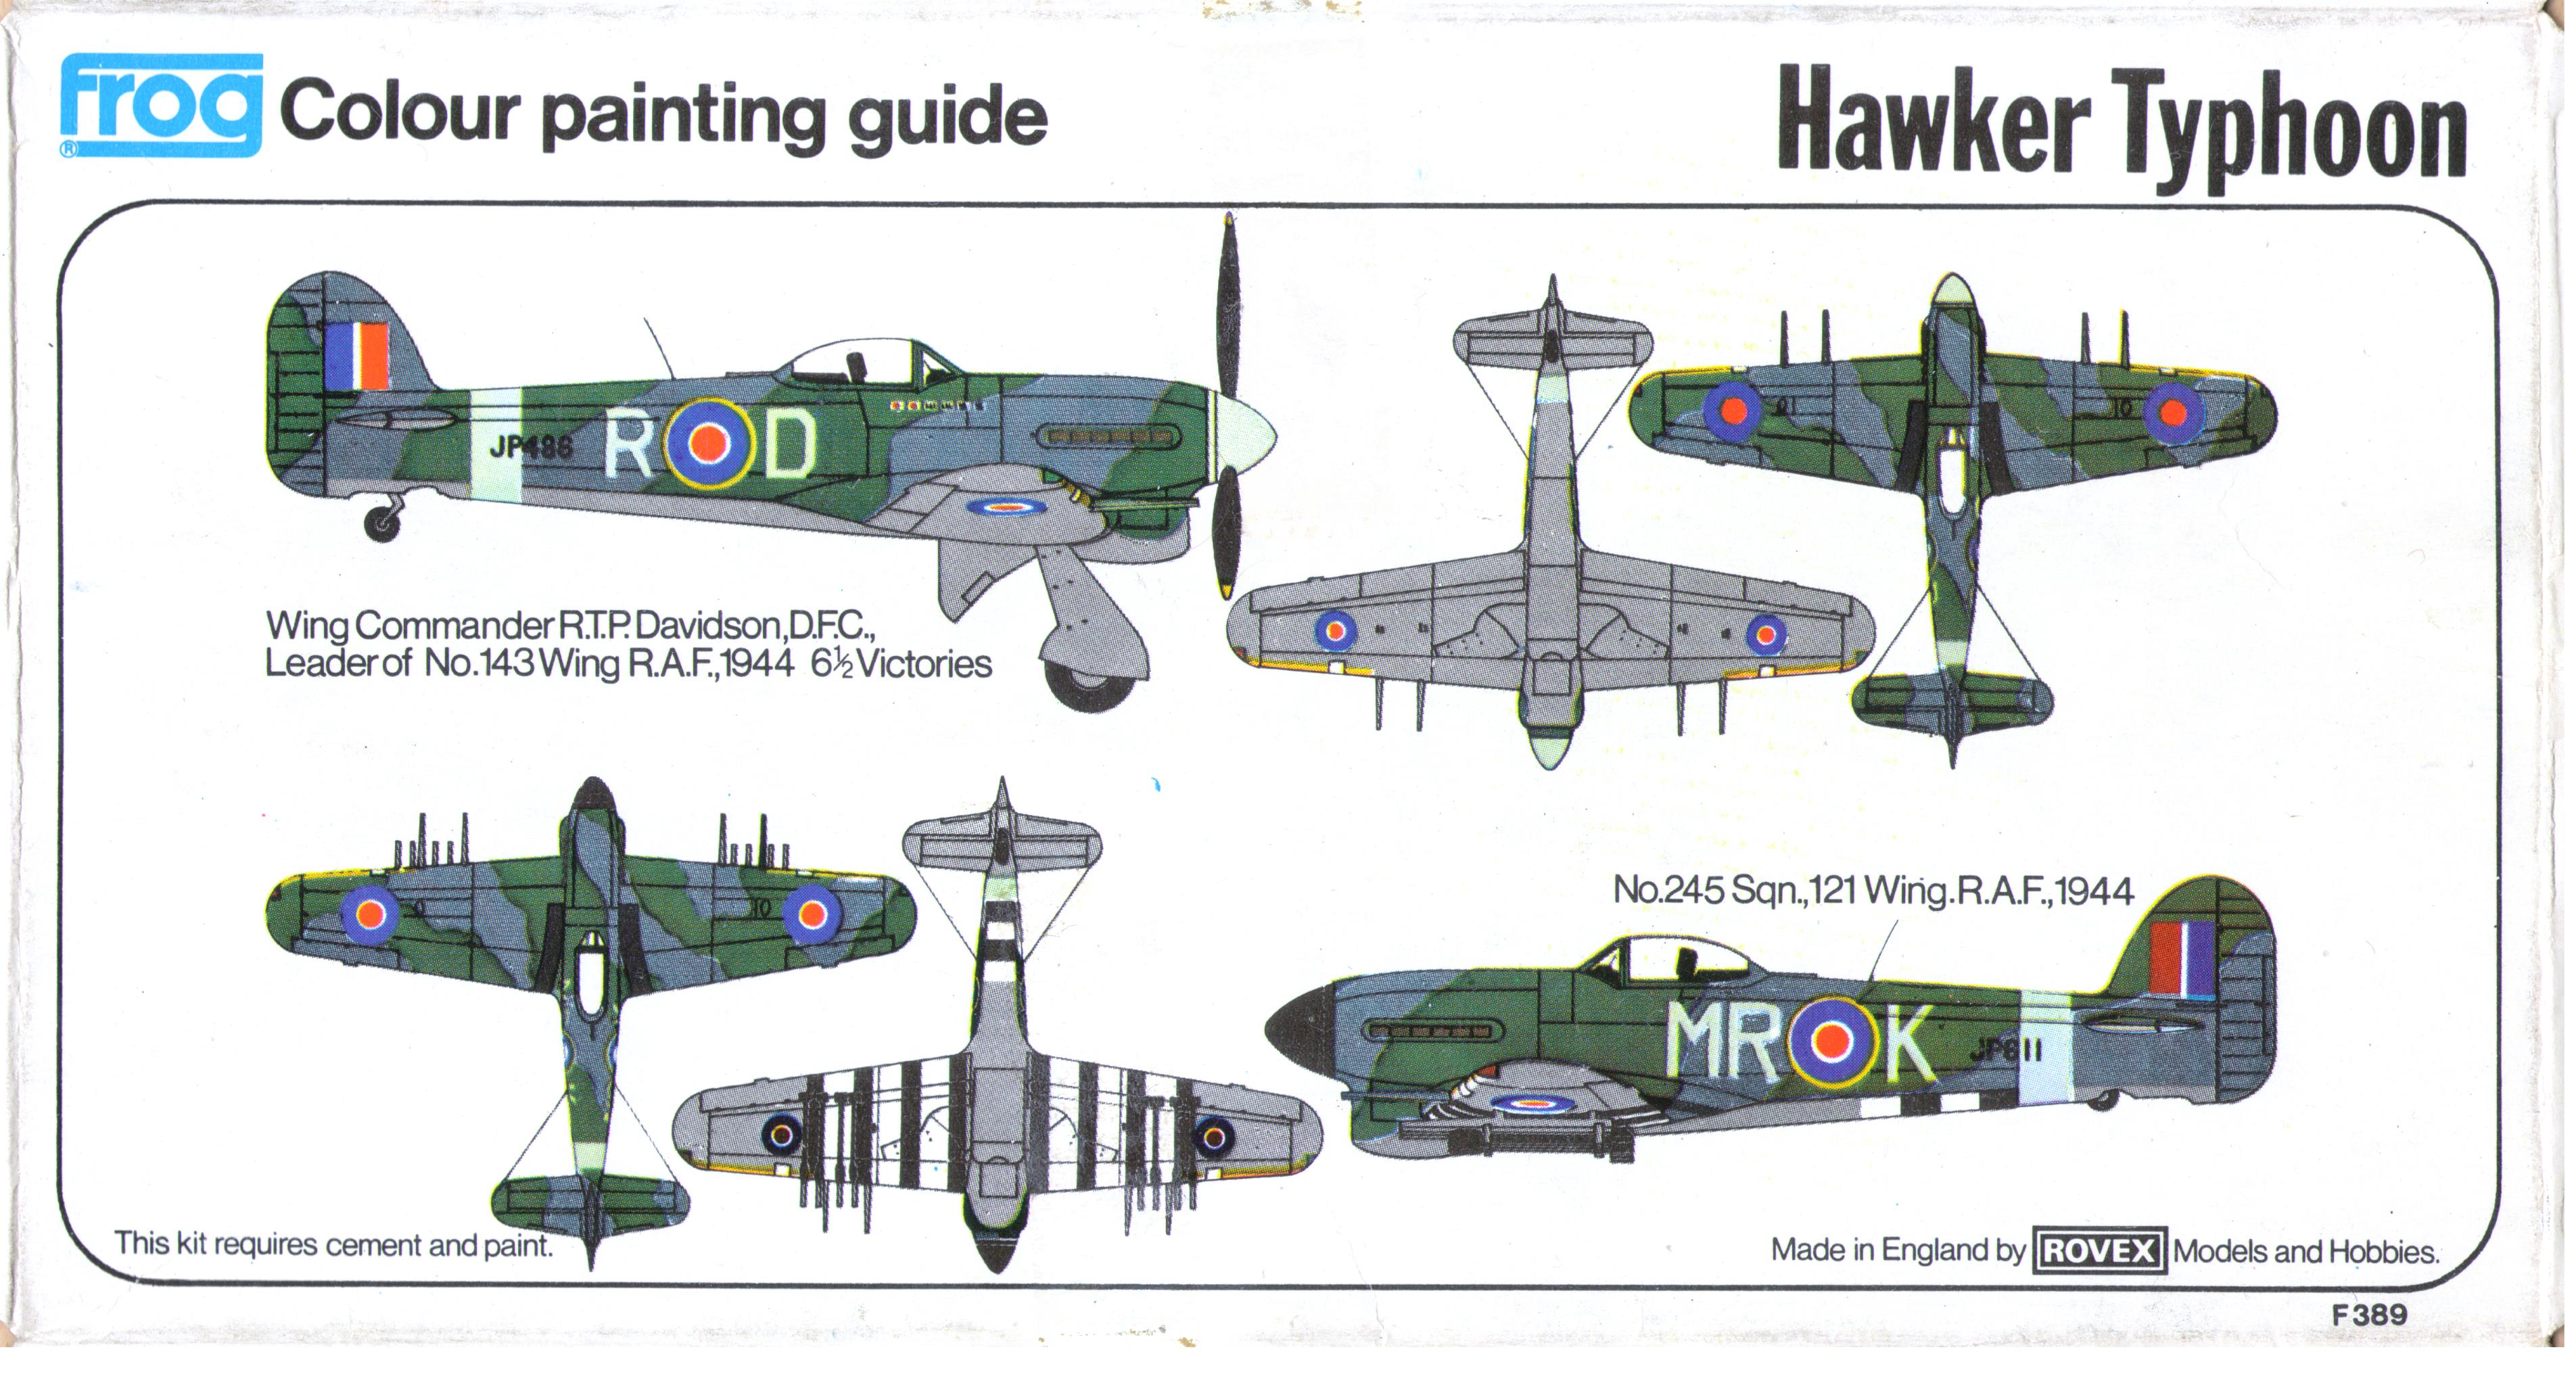 Верх коробки FROG F389 Blue series Hawker Typhoon, Rovex Models & Hobbies, 1974-75